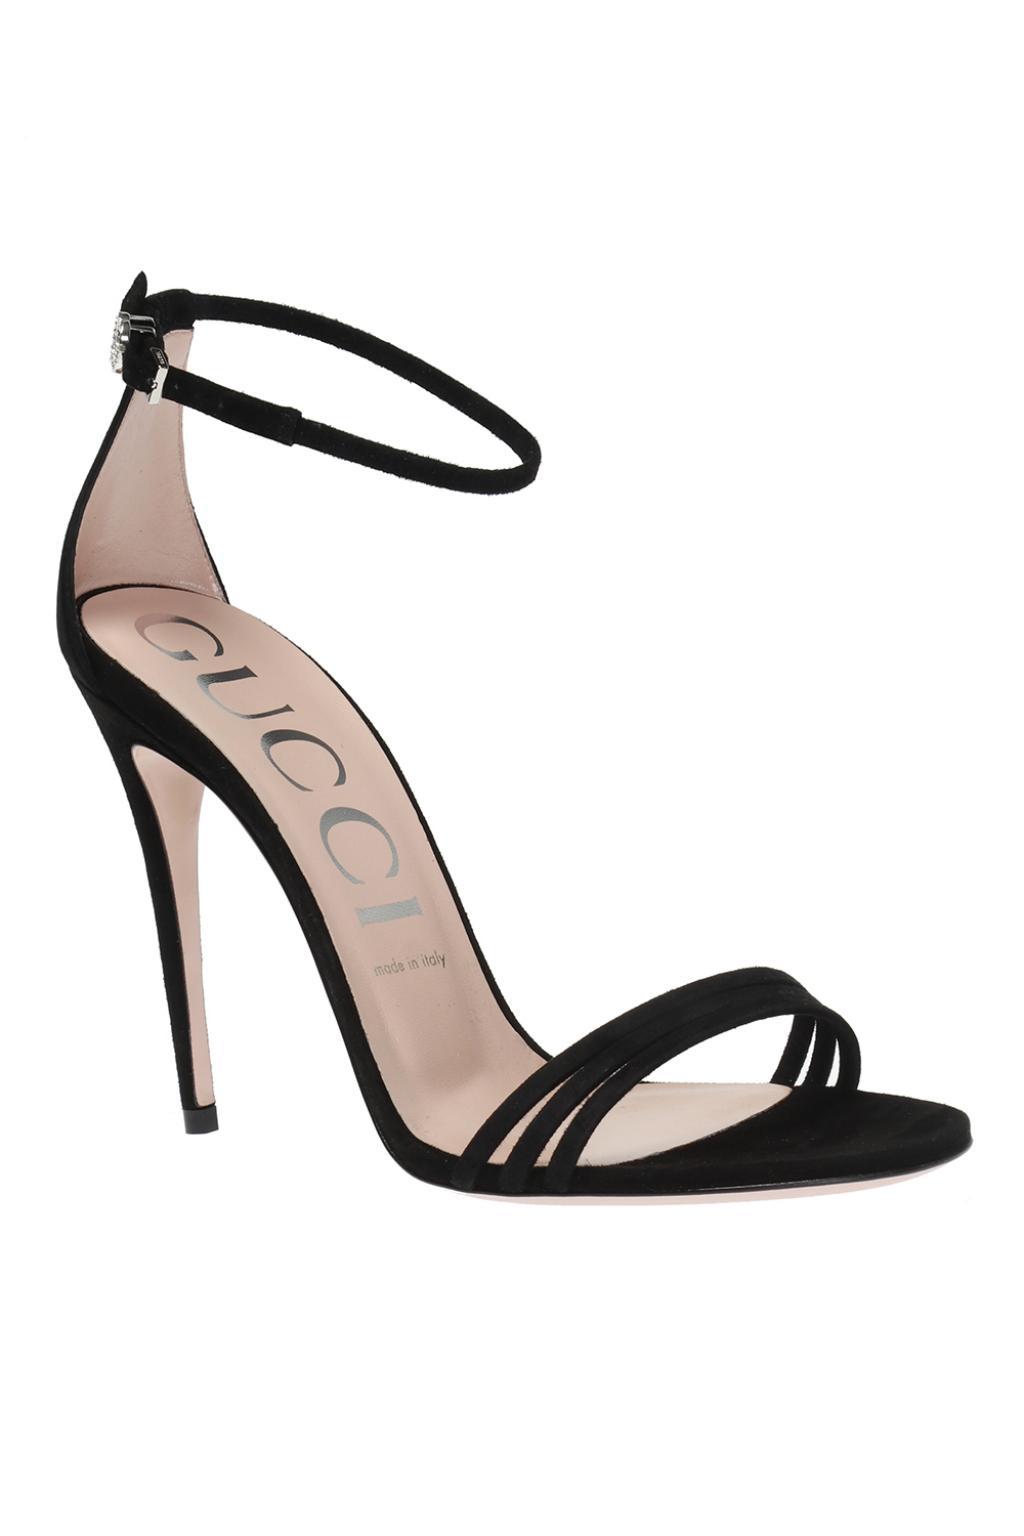  Gucci  Suede Stiletto Sandals  in Black Lyst